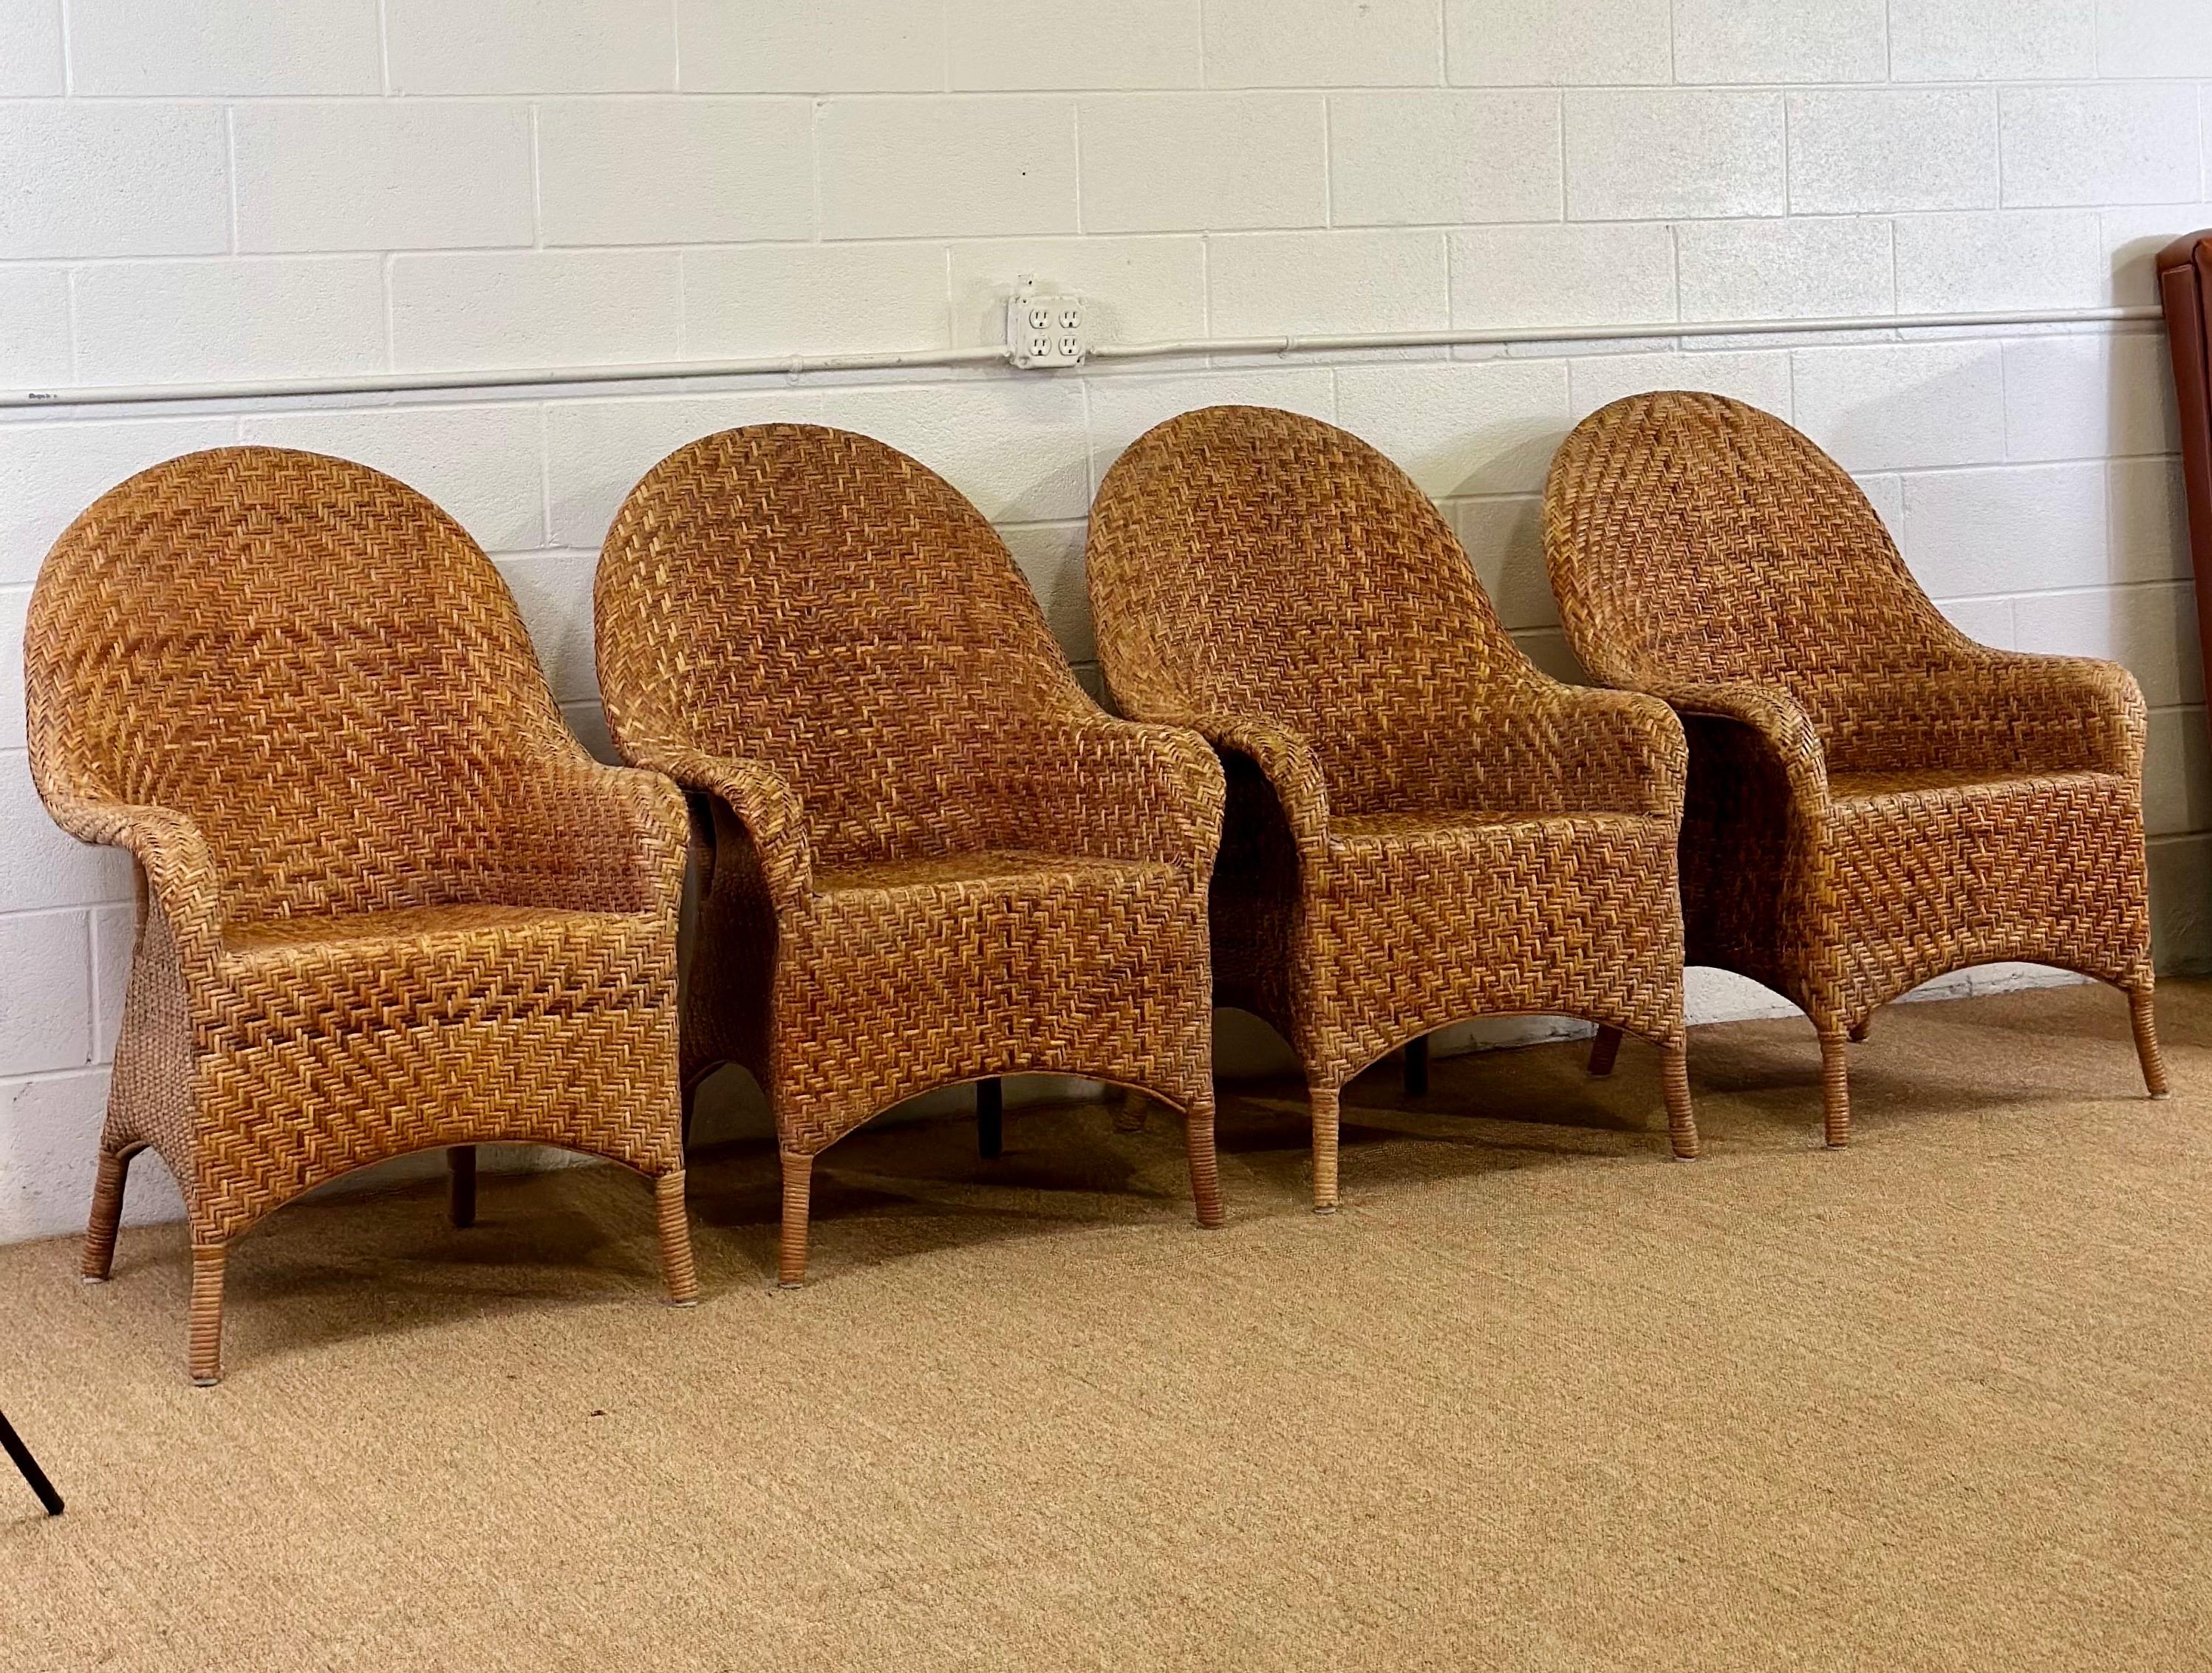 Bohemian Vintage Organic Modern Woven Herringbone Wicker Rattan Dining Chairs - Set of 4 